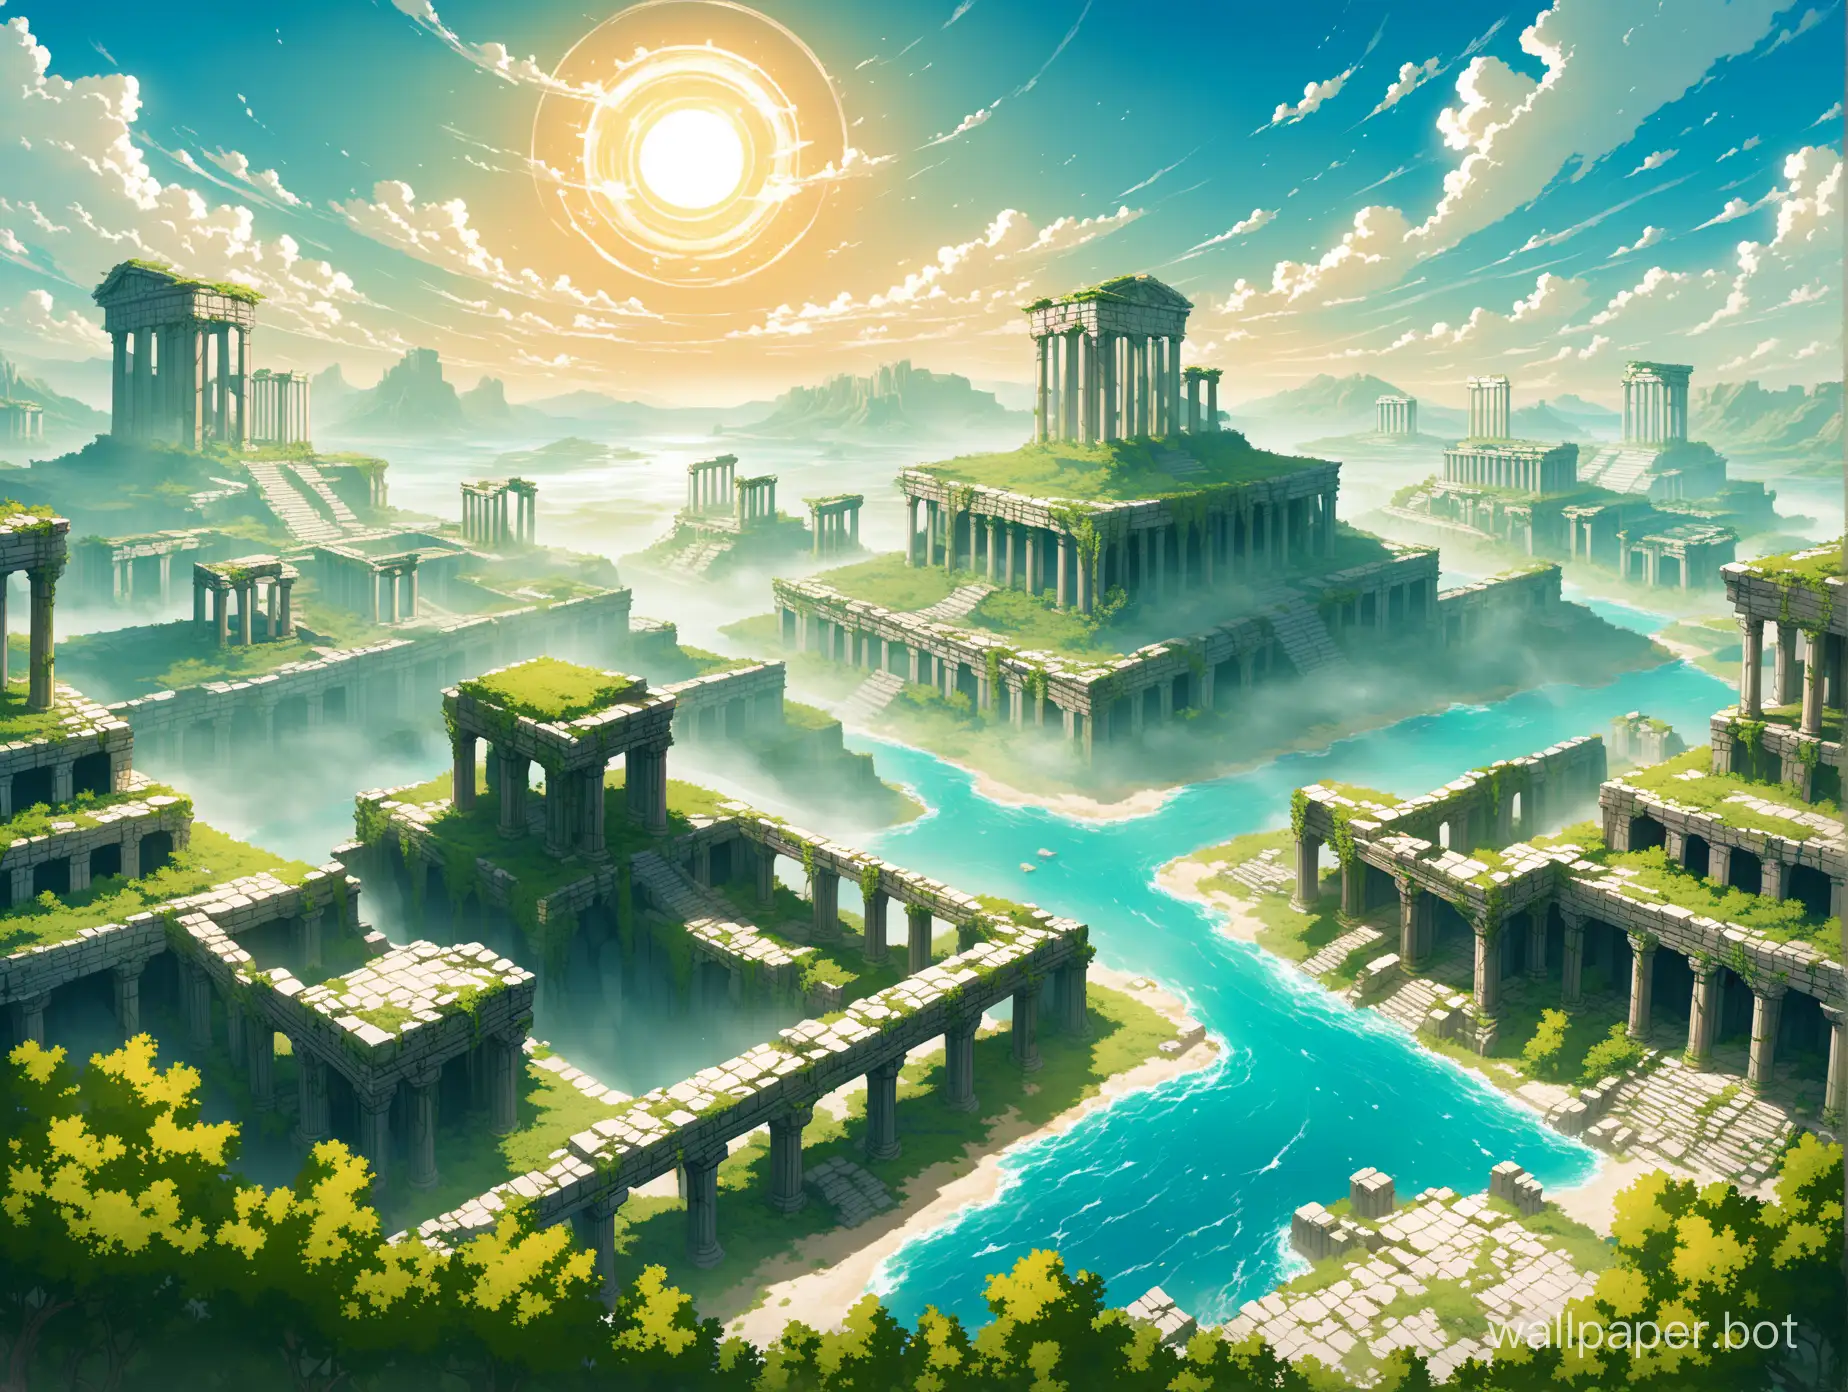 fighting stage videogame, greek mythic battleplain of the gods, elysium ruins, huge buildings and vegetation floating in the sky